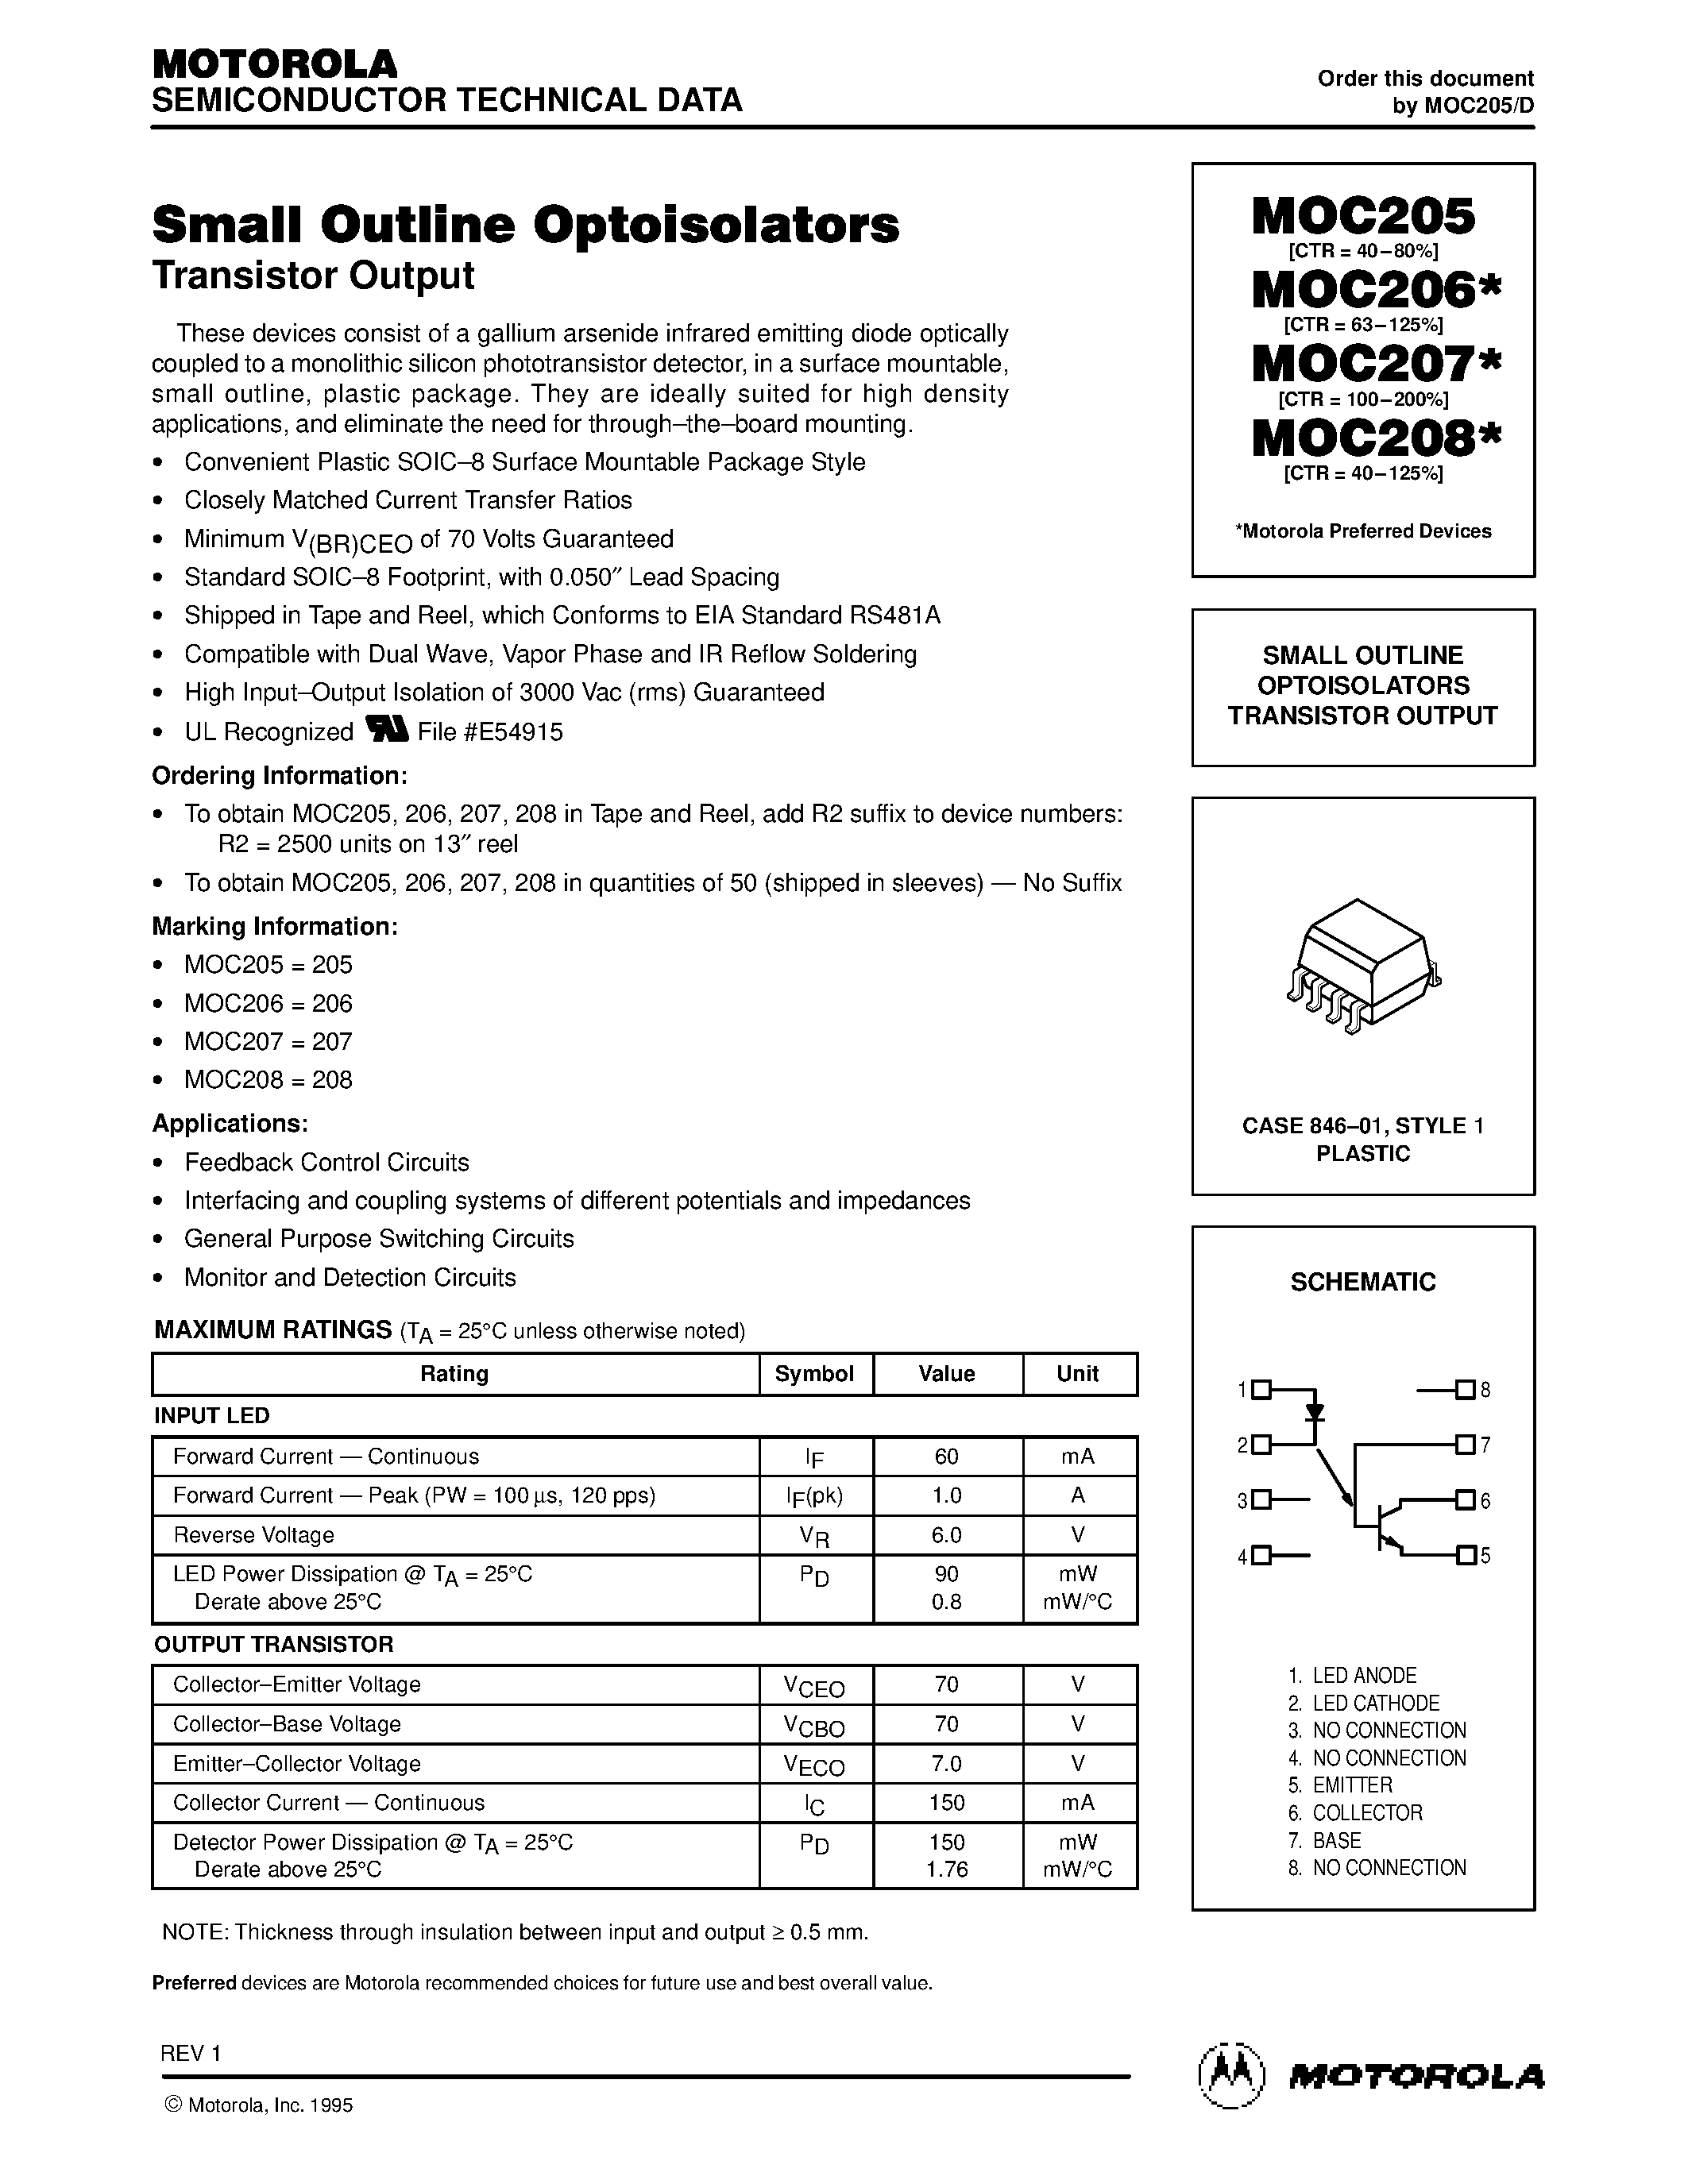 Даташит MOC205 - (MOC205 - MOC208) SMALL OUTLINE OPTOISOLATORS TRANSISTOR OUTPUT страница 1